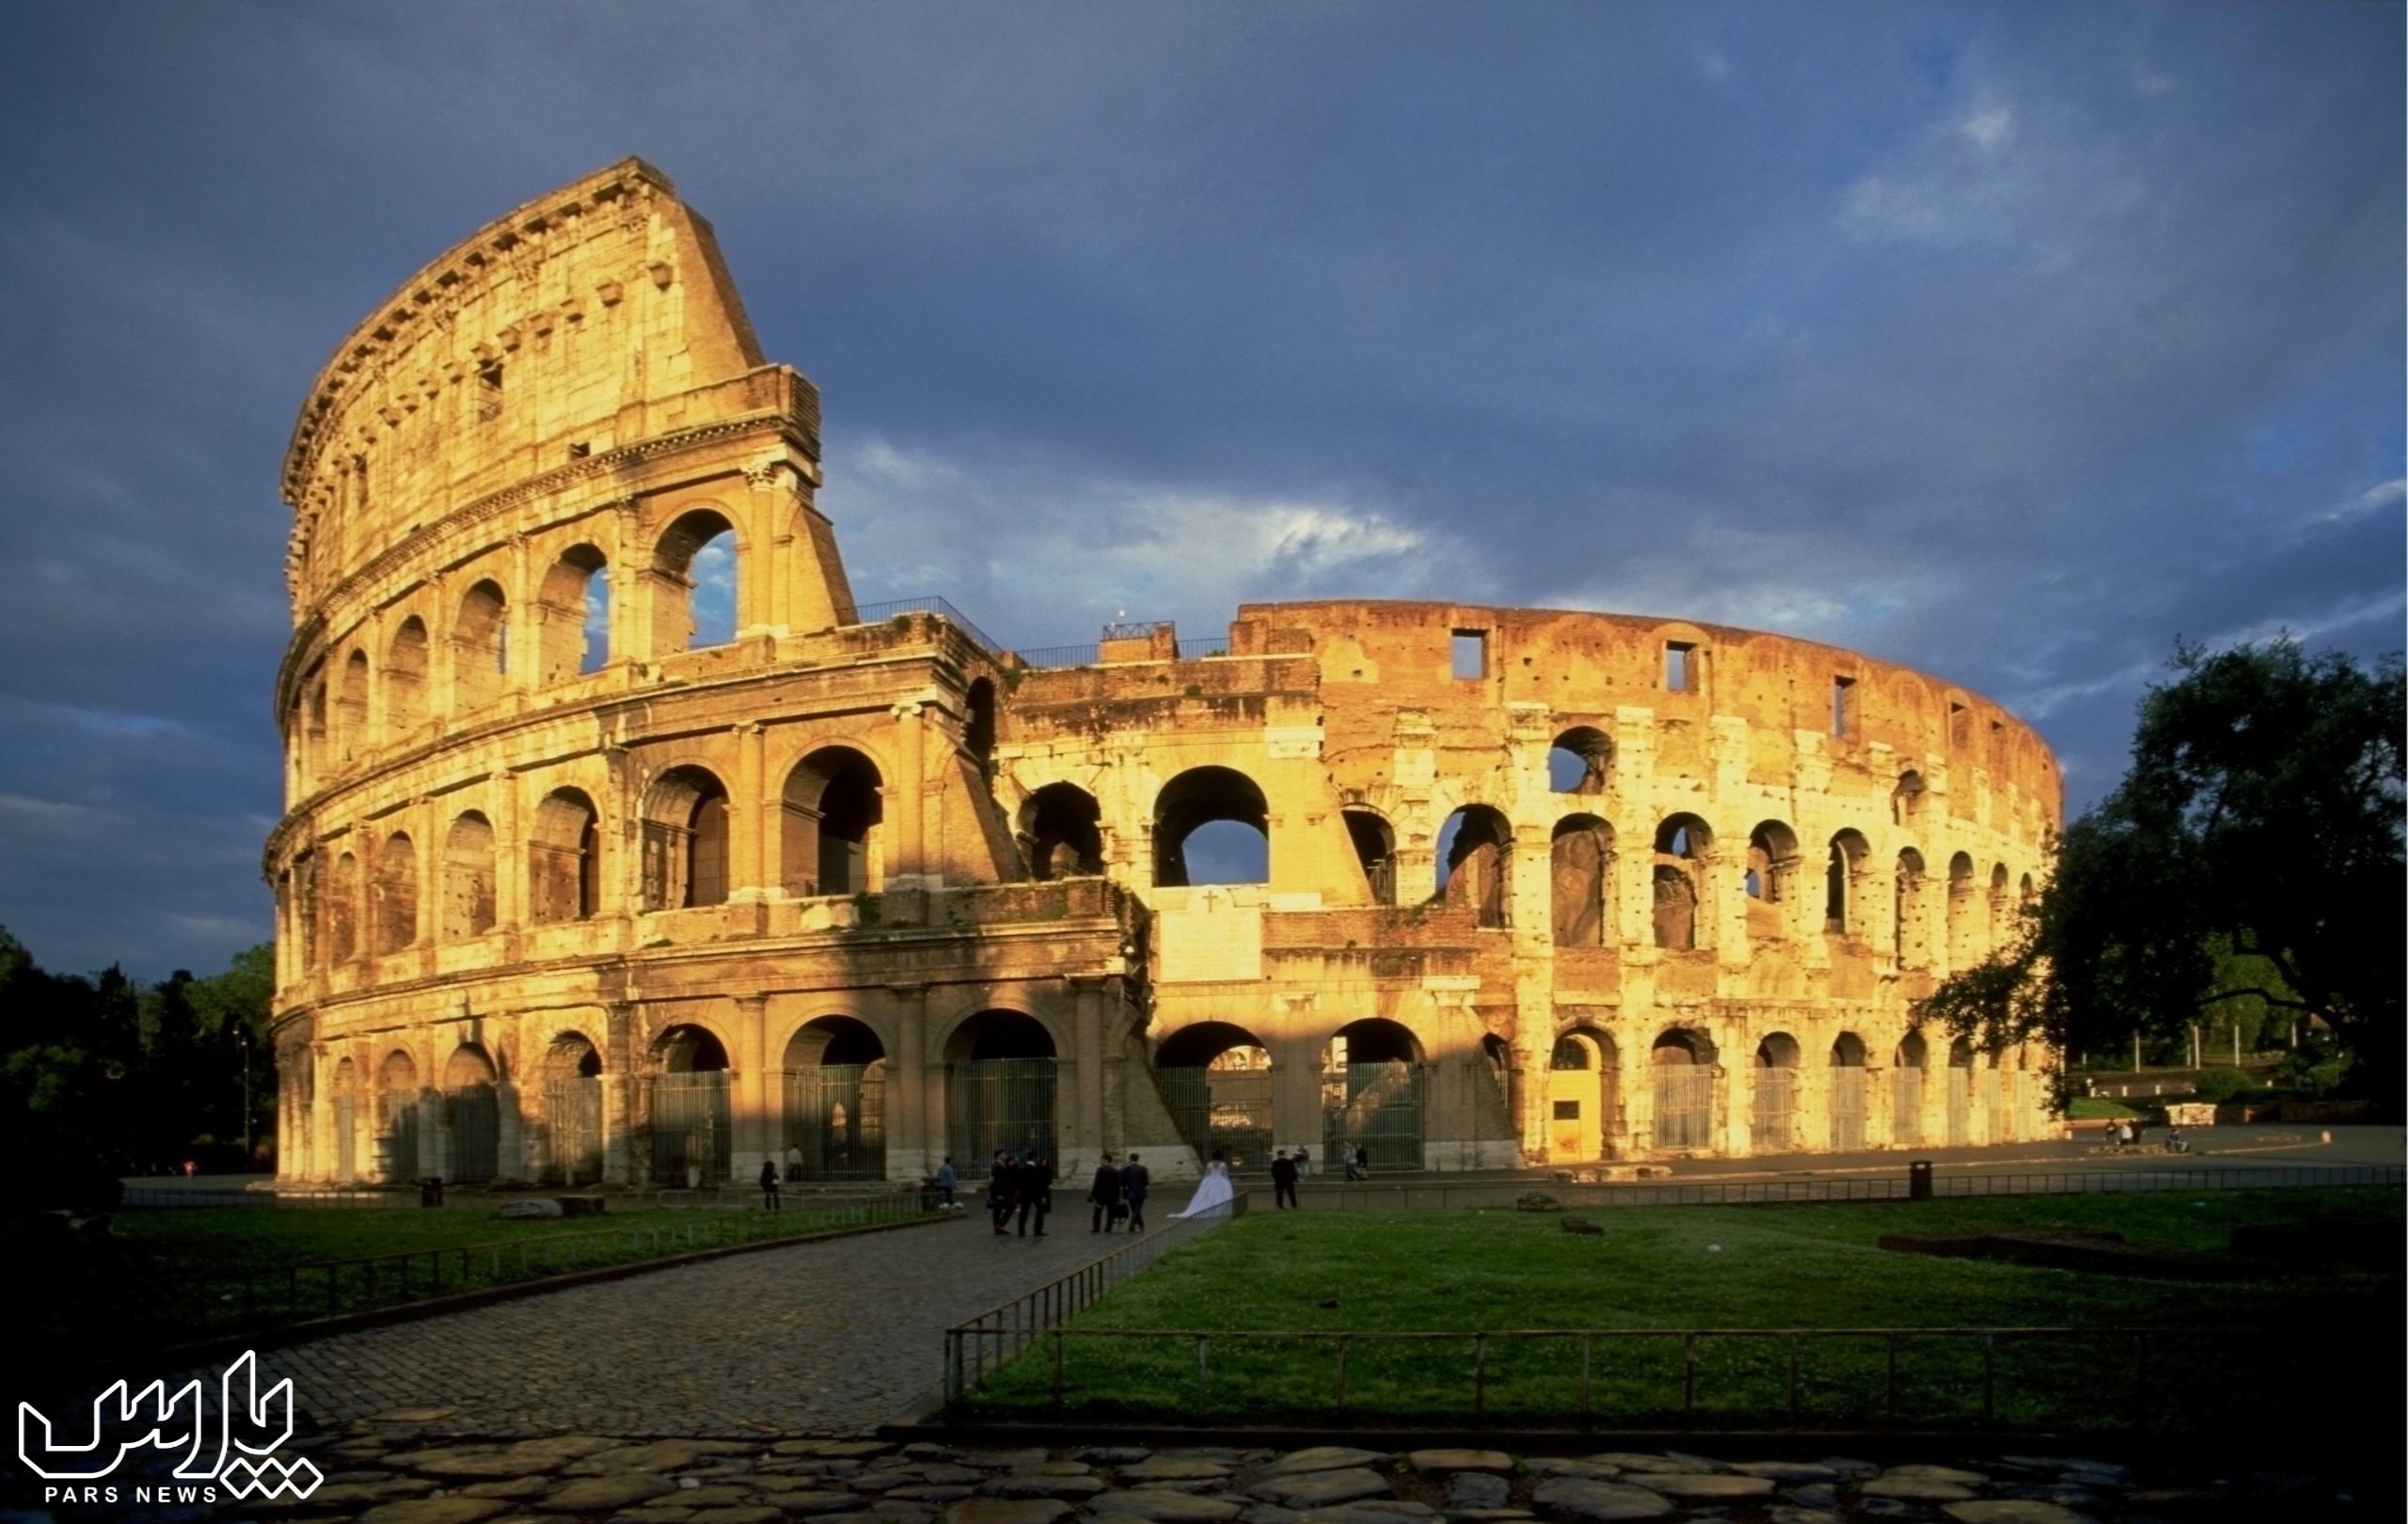 کولوسئوم رم - عجایب هفت گانه ی دنیا